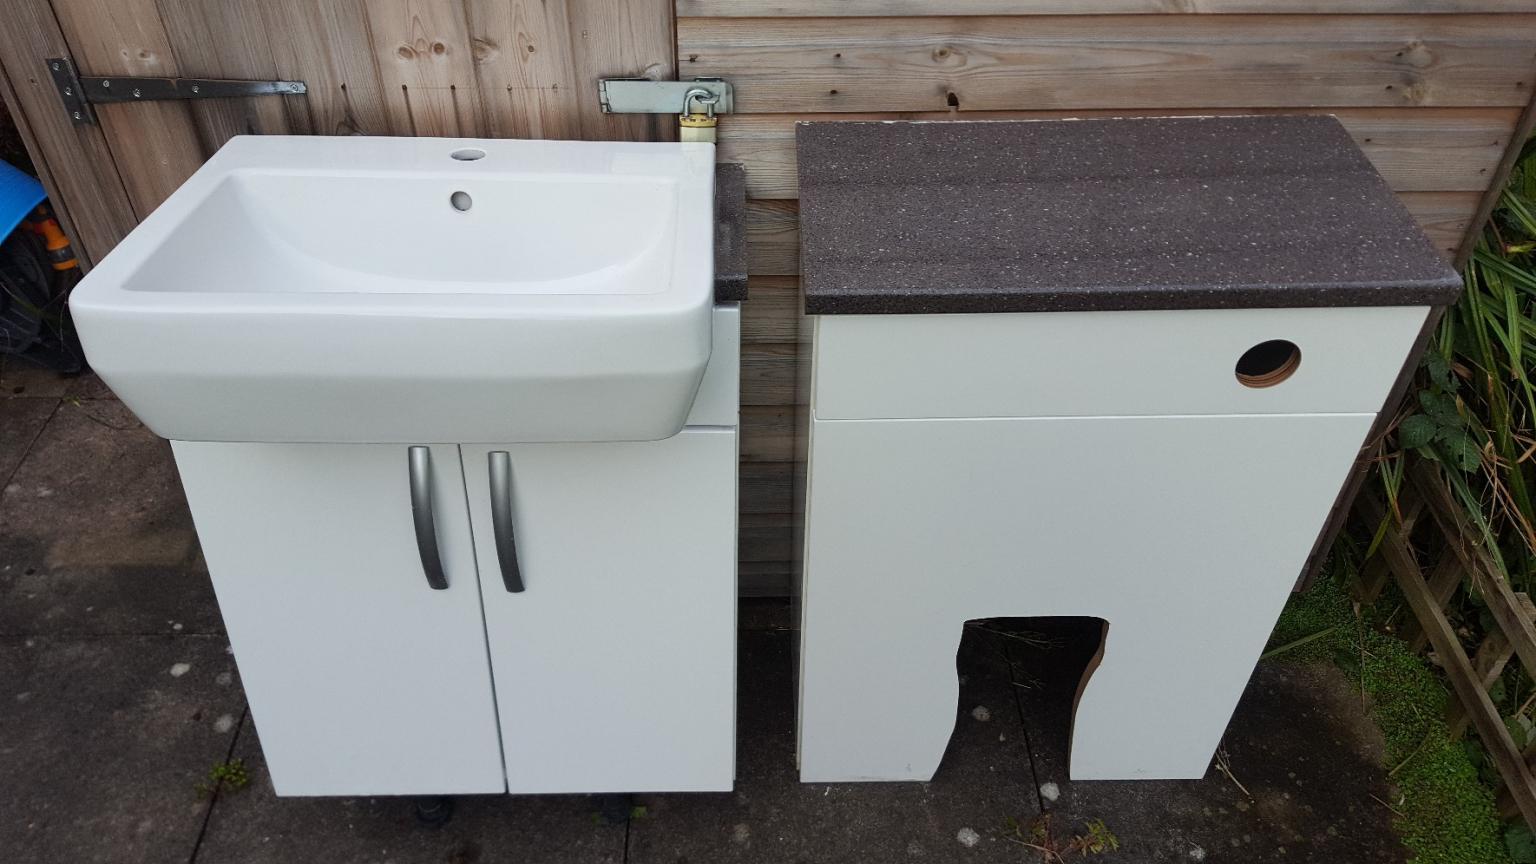 Sink Vanity Unit And Toilet Carcase